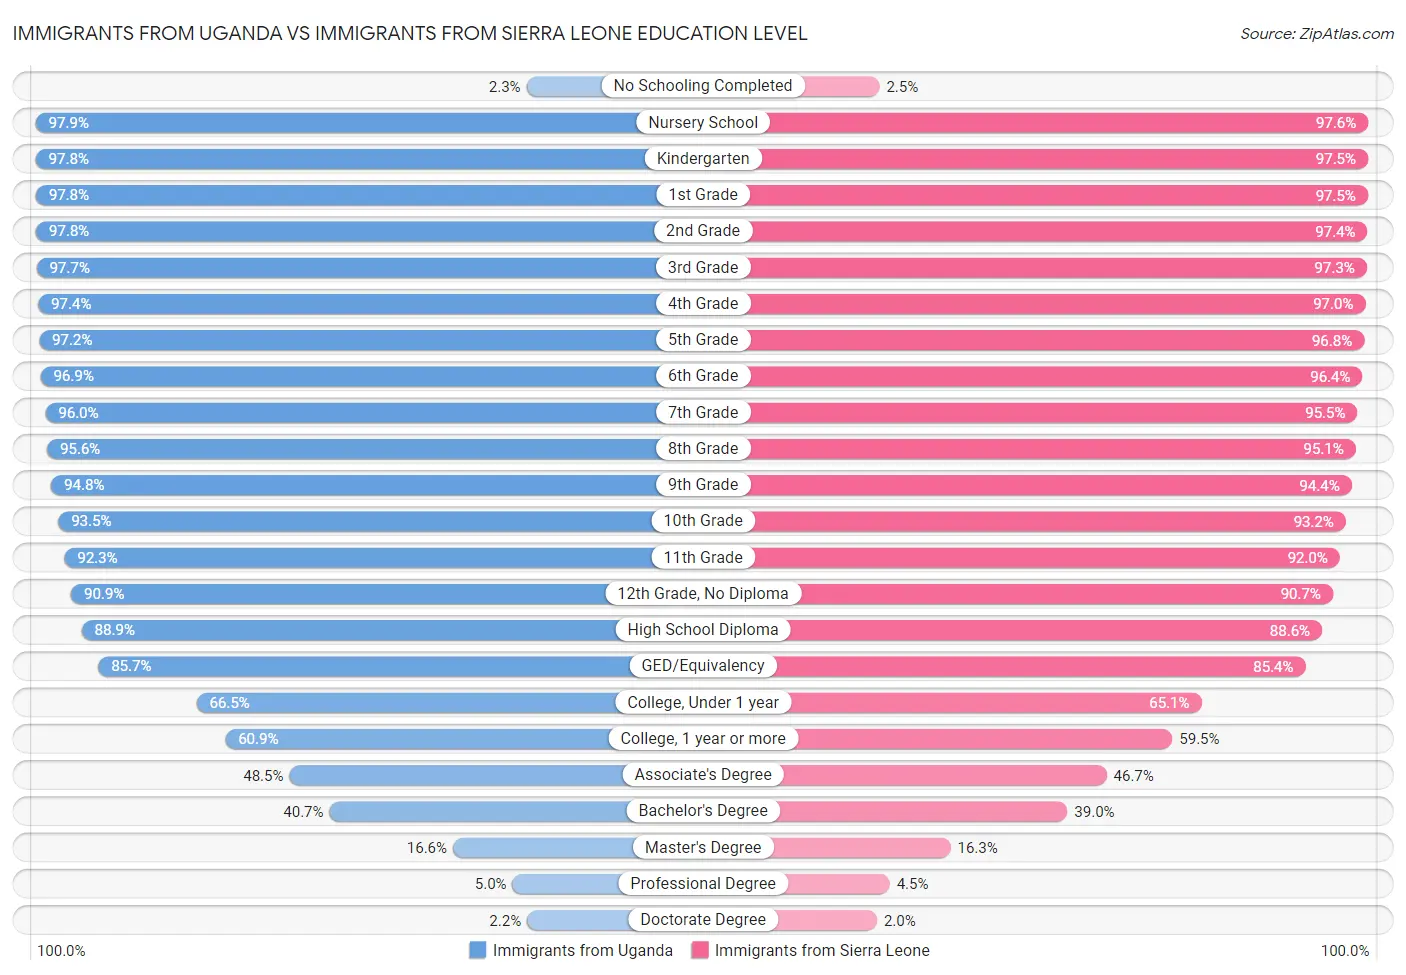 Immigrants from Uganda vs Immigrants from Sierra Leone Education Level